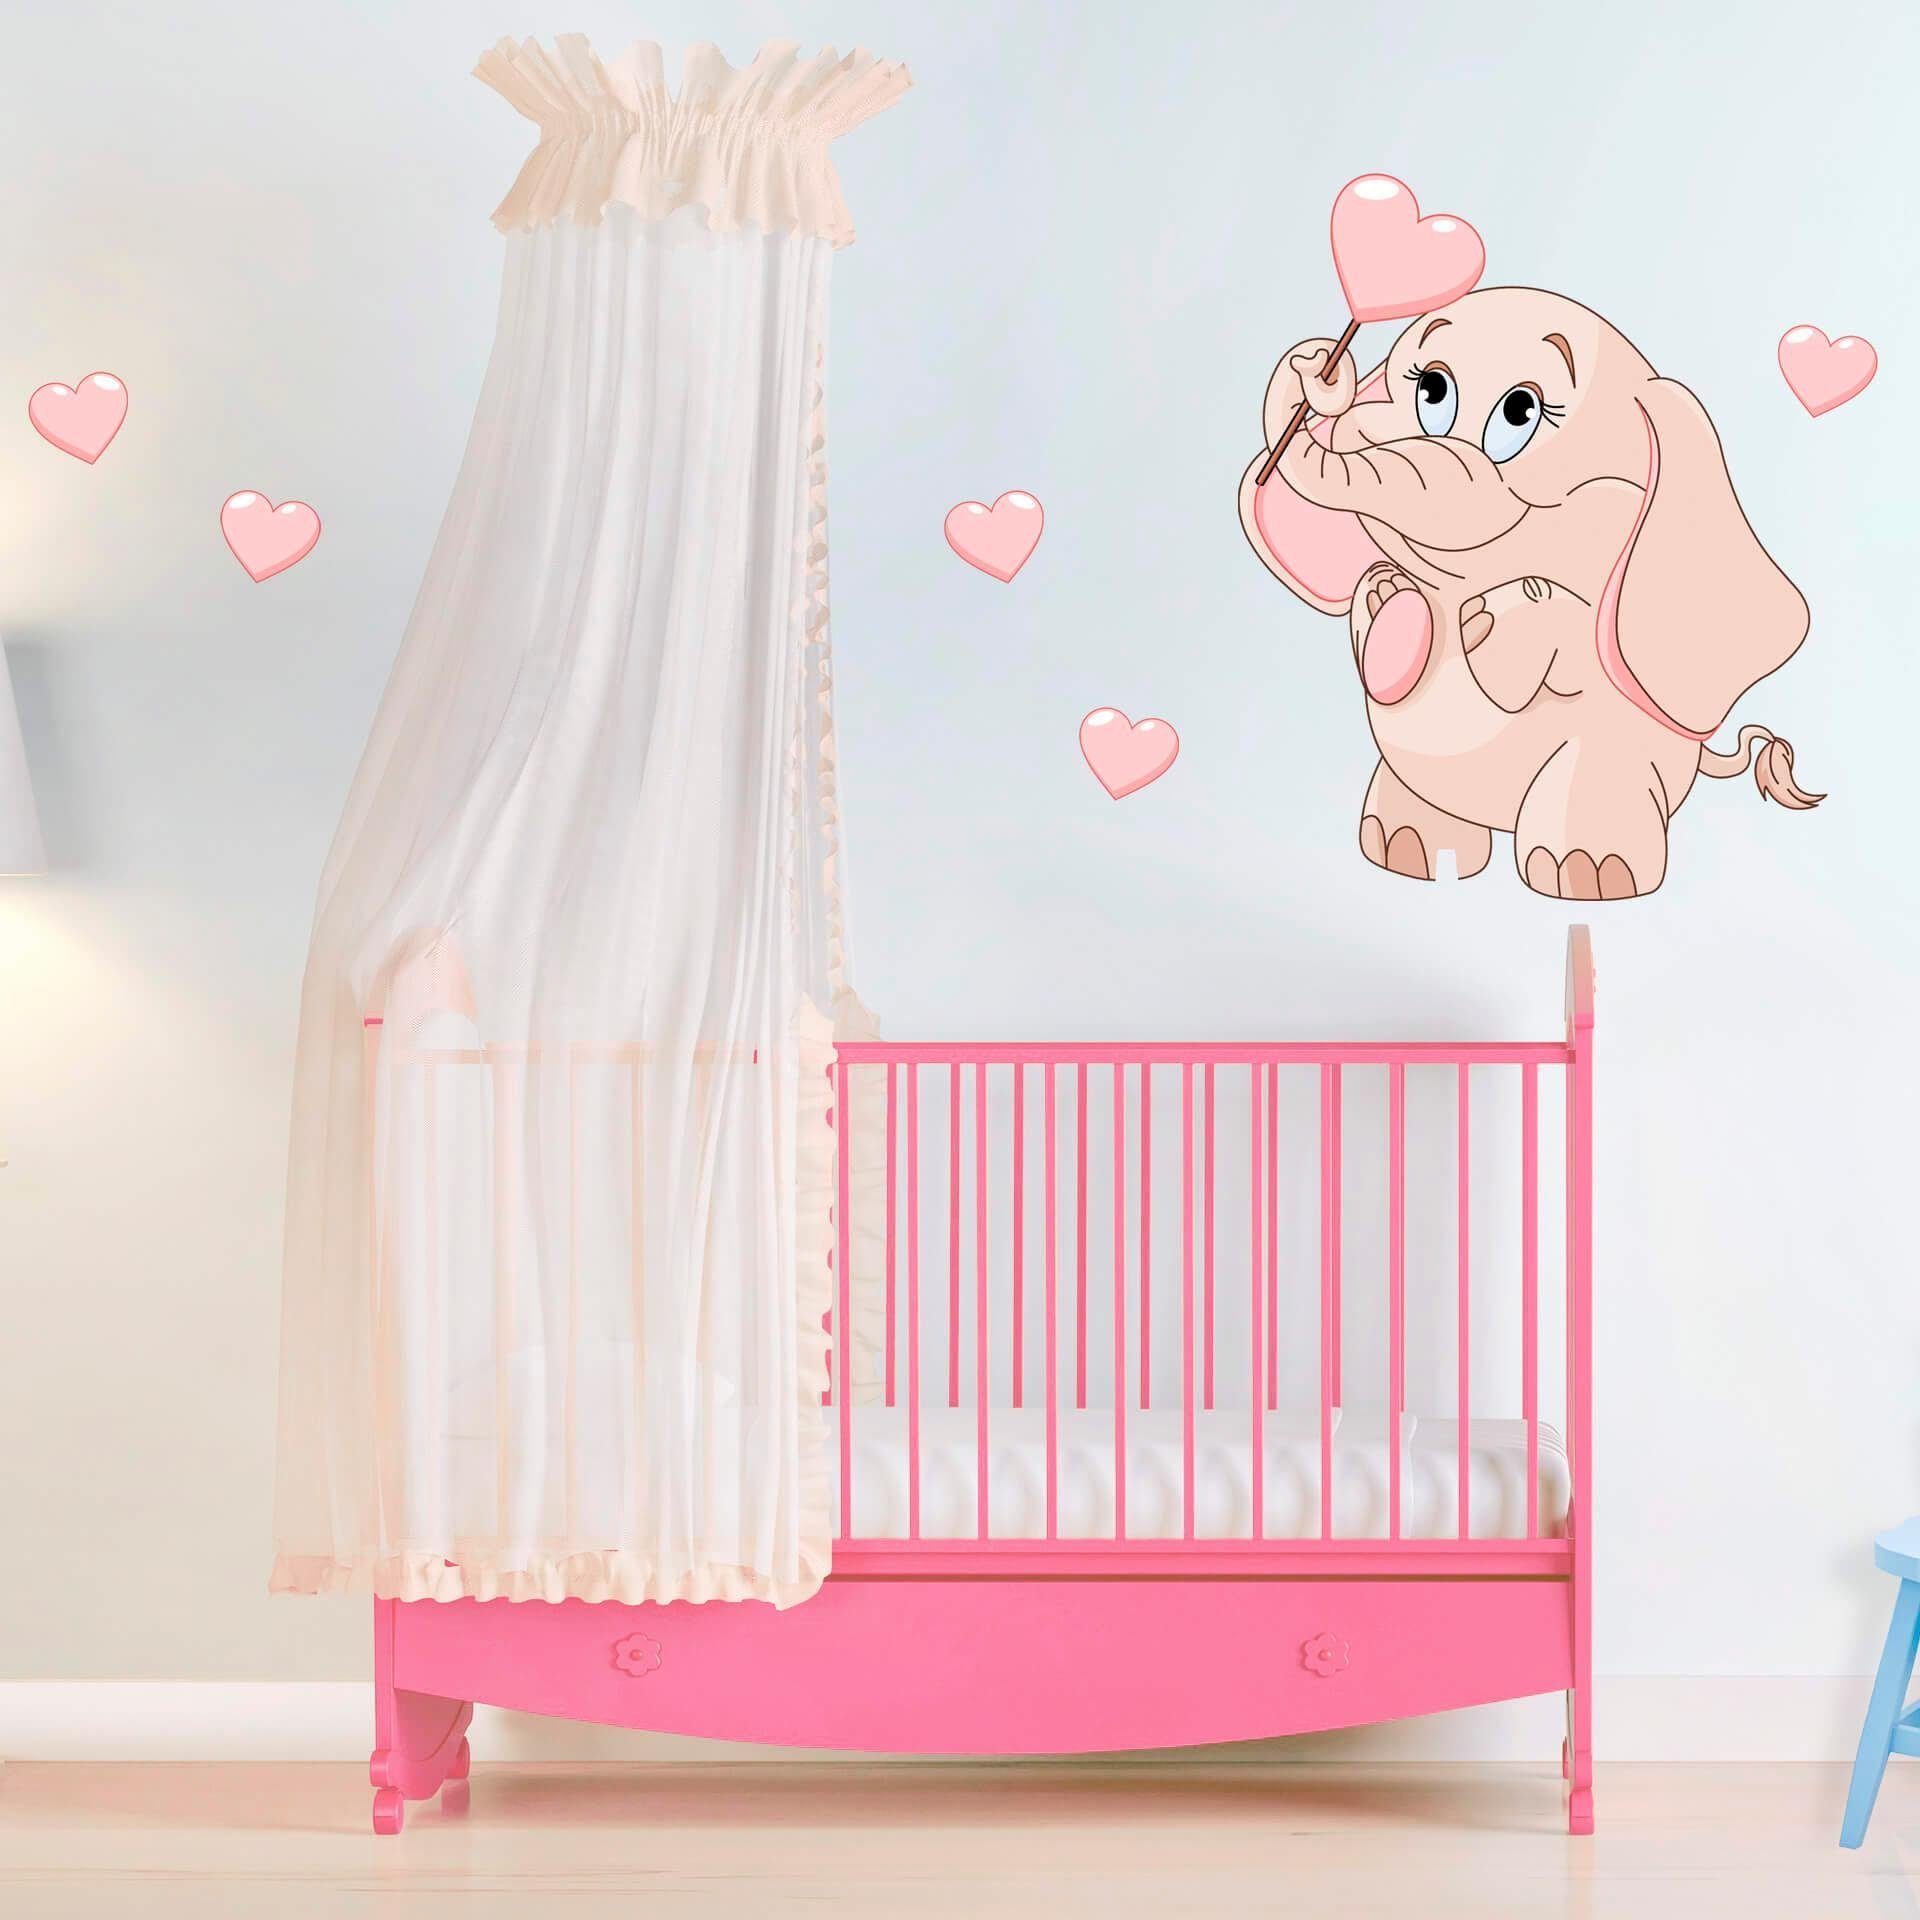 Elefantenbaby mit Herzen + Wandtattoo rosa Wall-Art Leuchtsticker